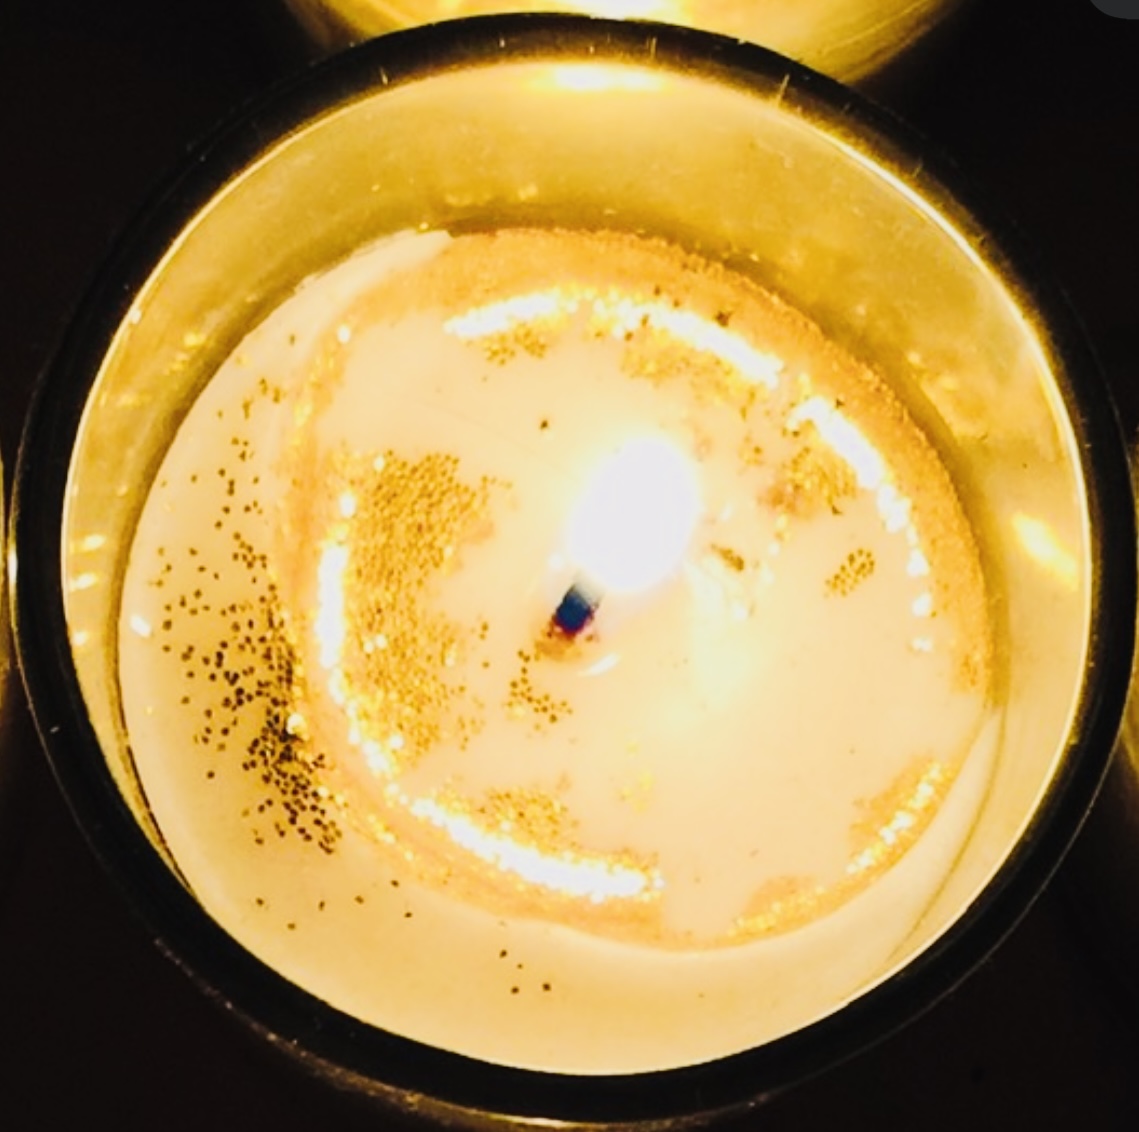 Candle Light Vigil For Peace